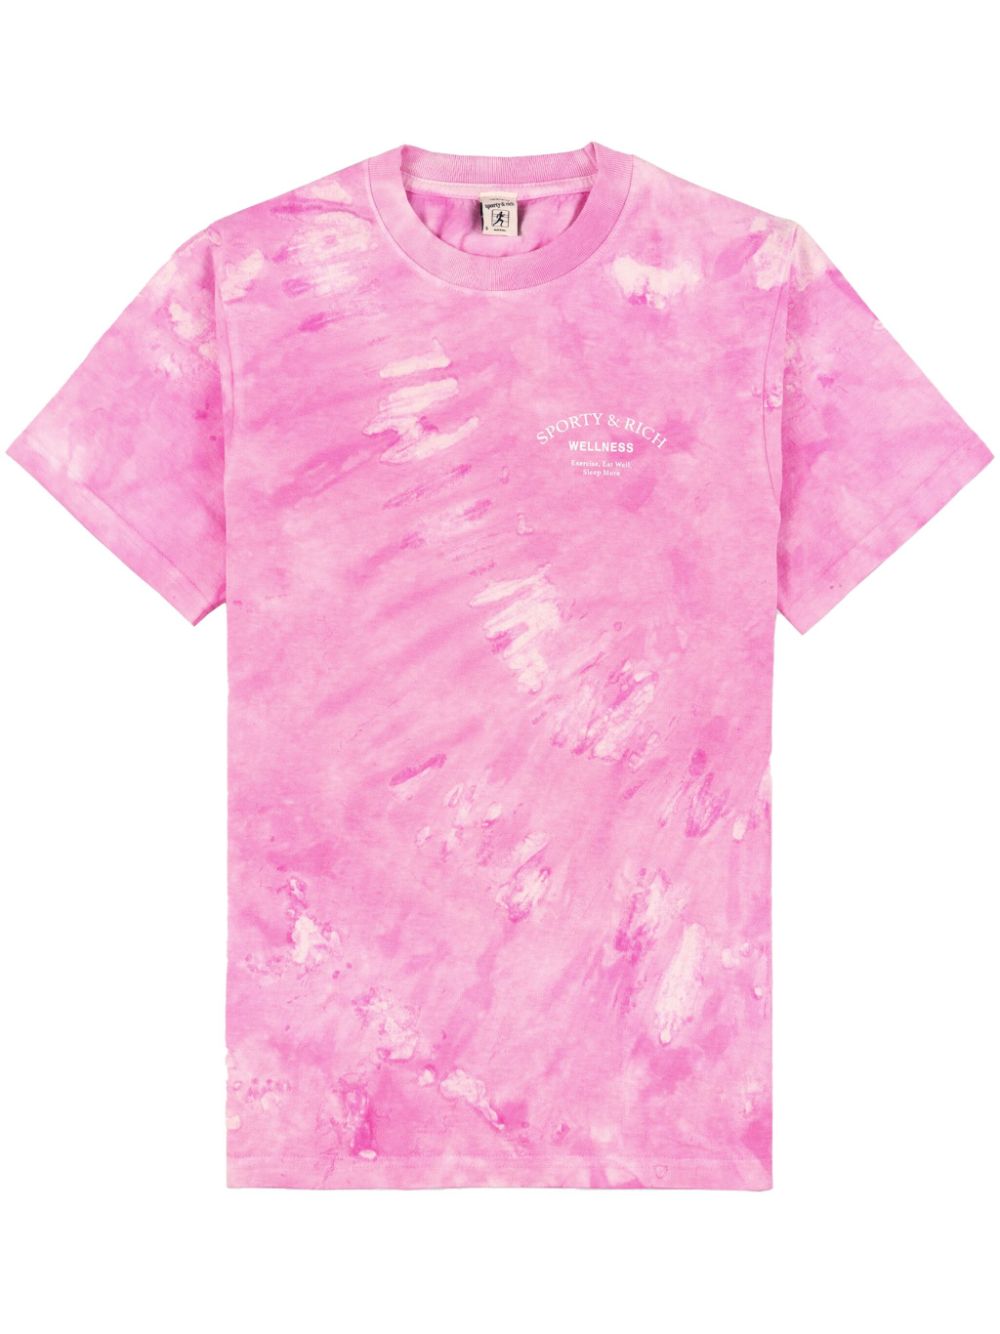 Sporty & Rich Wellness Studio tie-dye T-shirt - Pink von Sporty & Rich